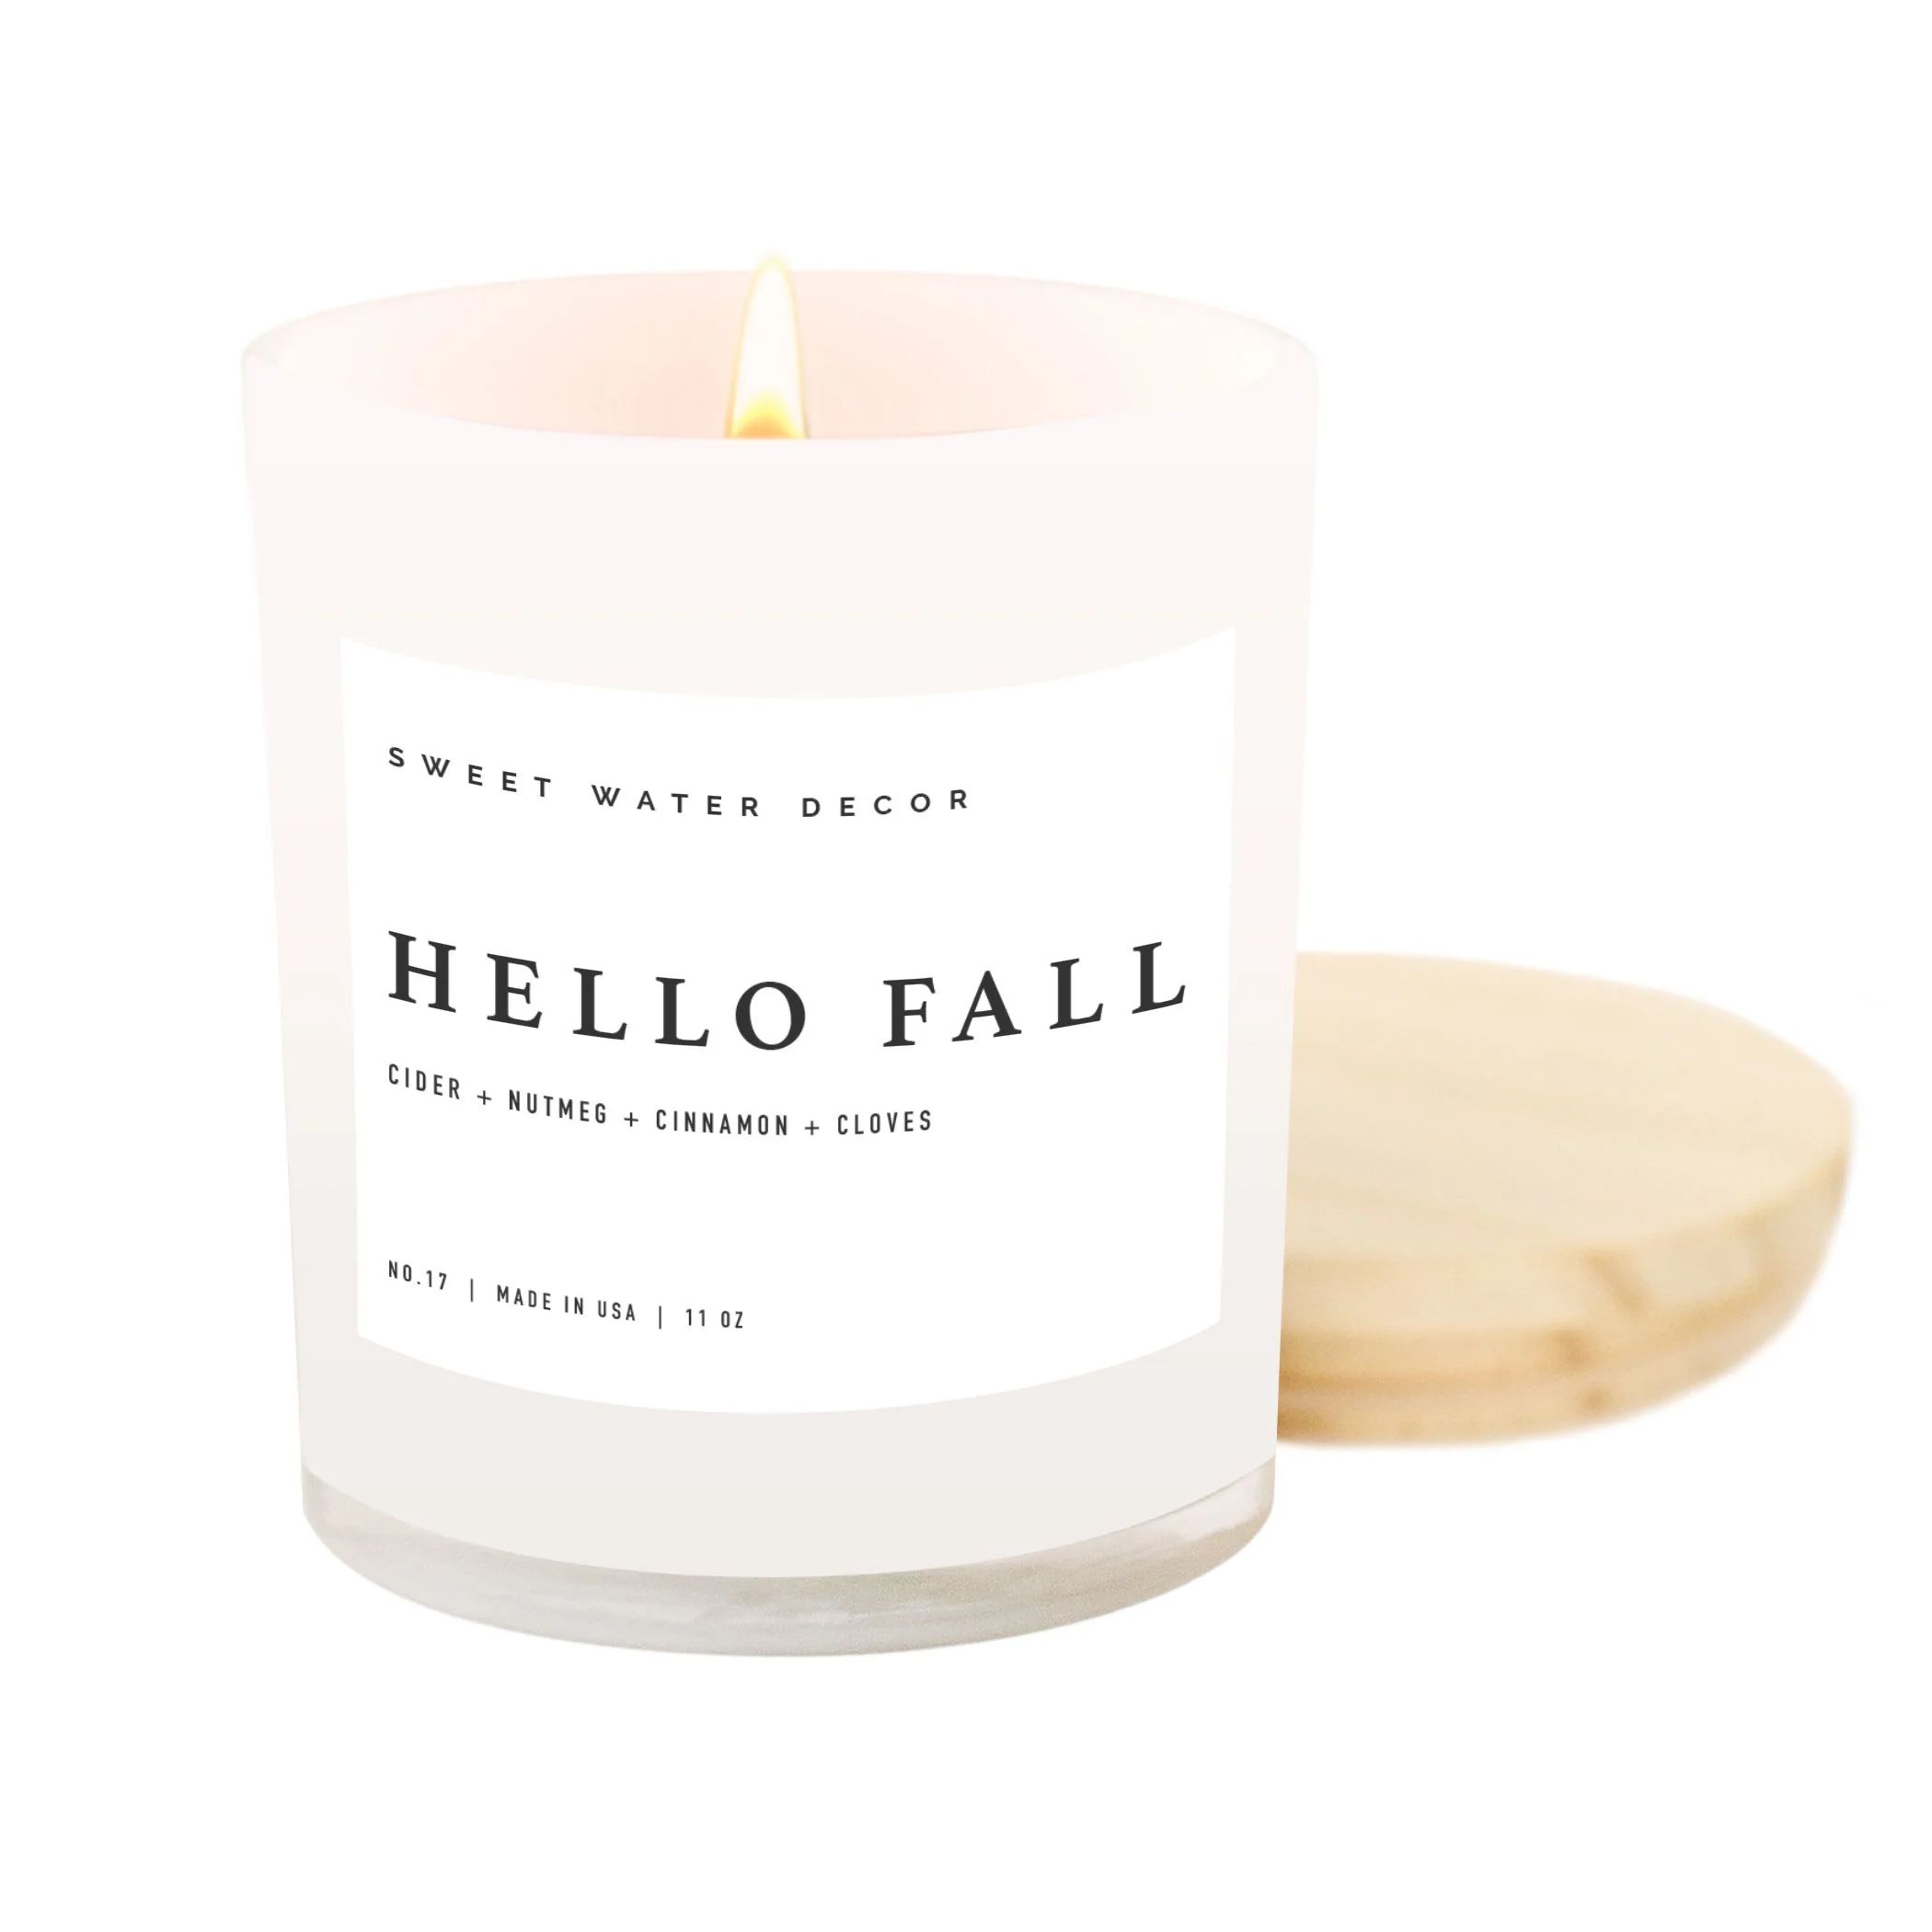 Hello Fall Soy Candle - White Jar - 11 oz | Sweet Water Decor, LLC